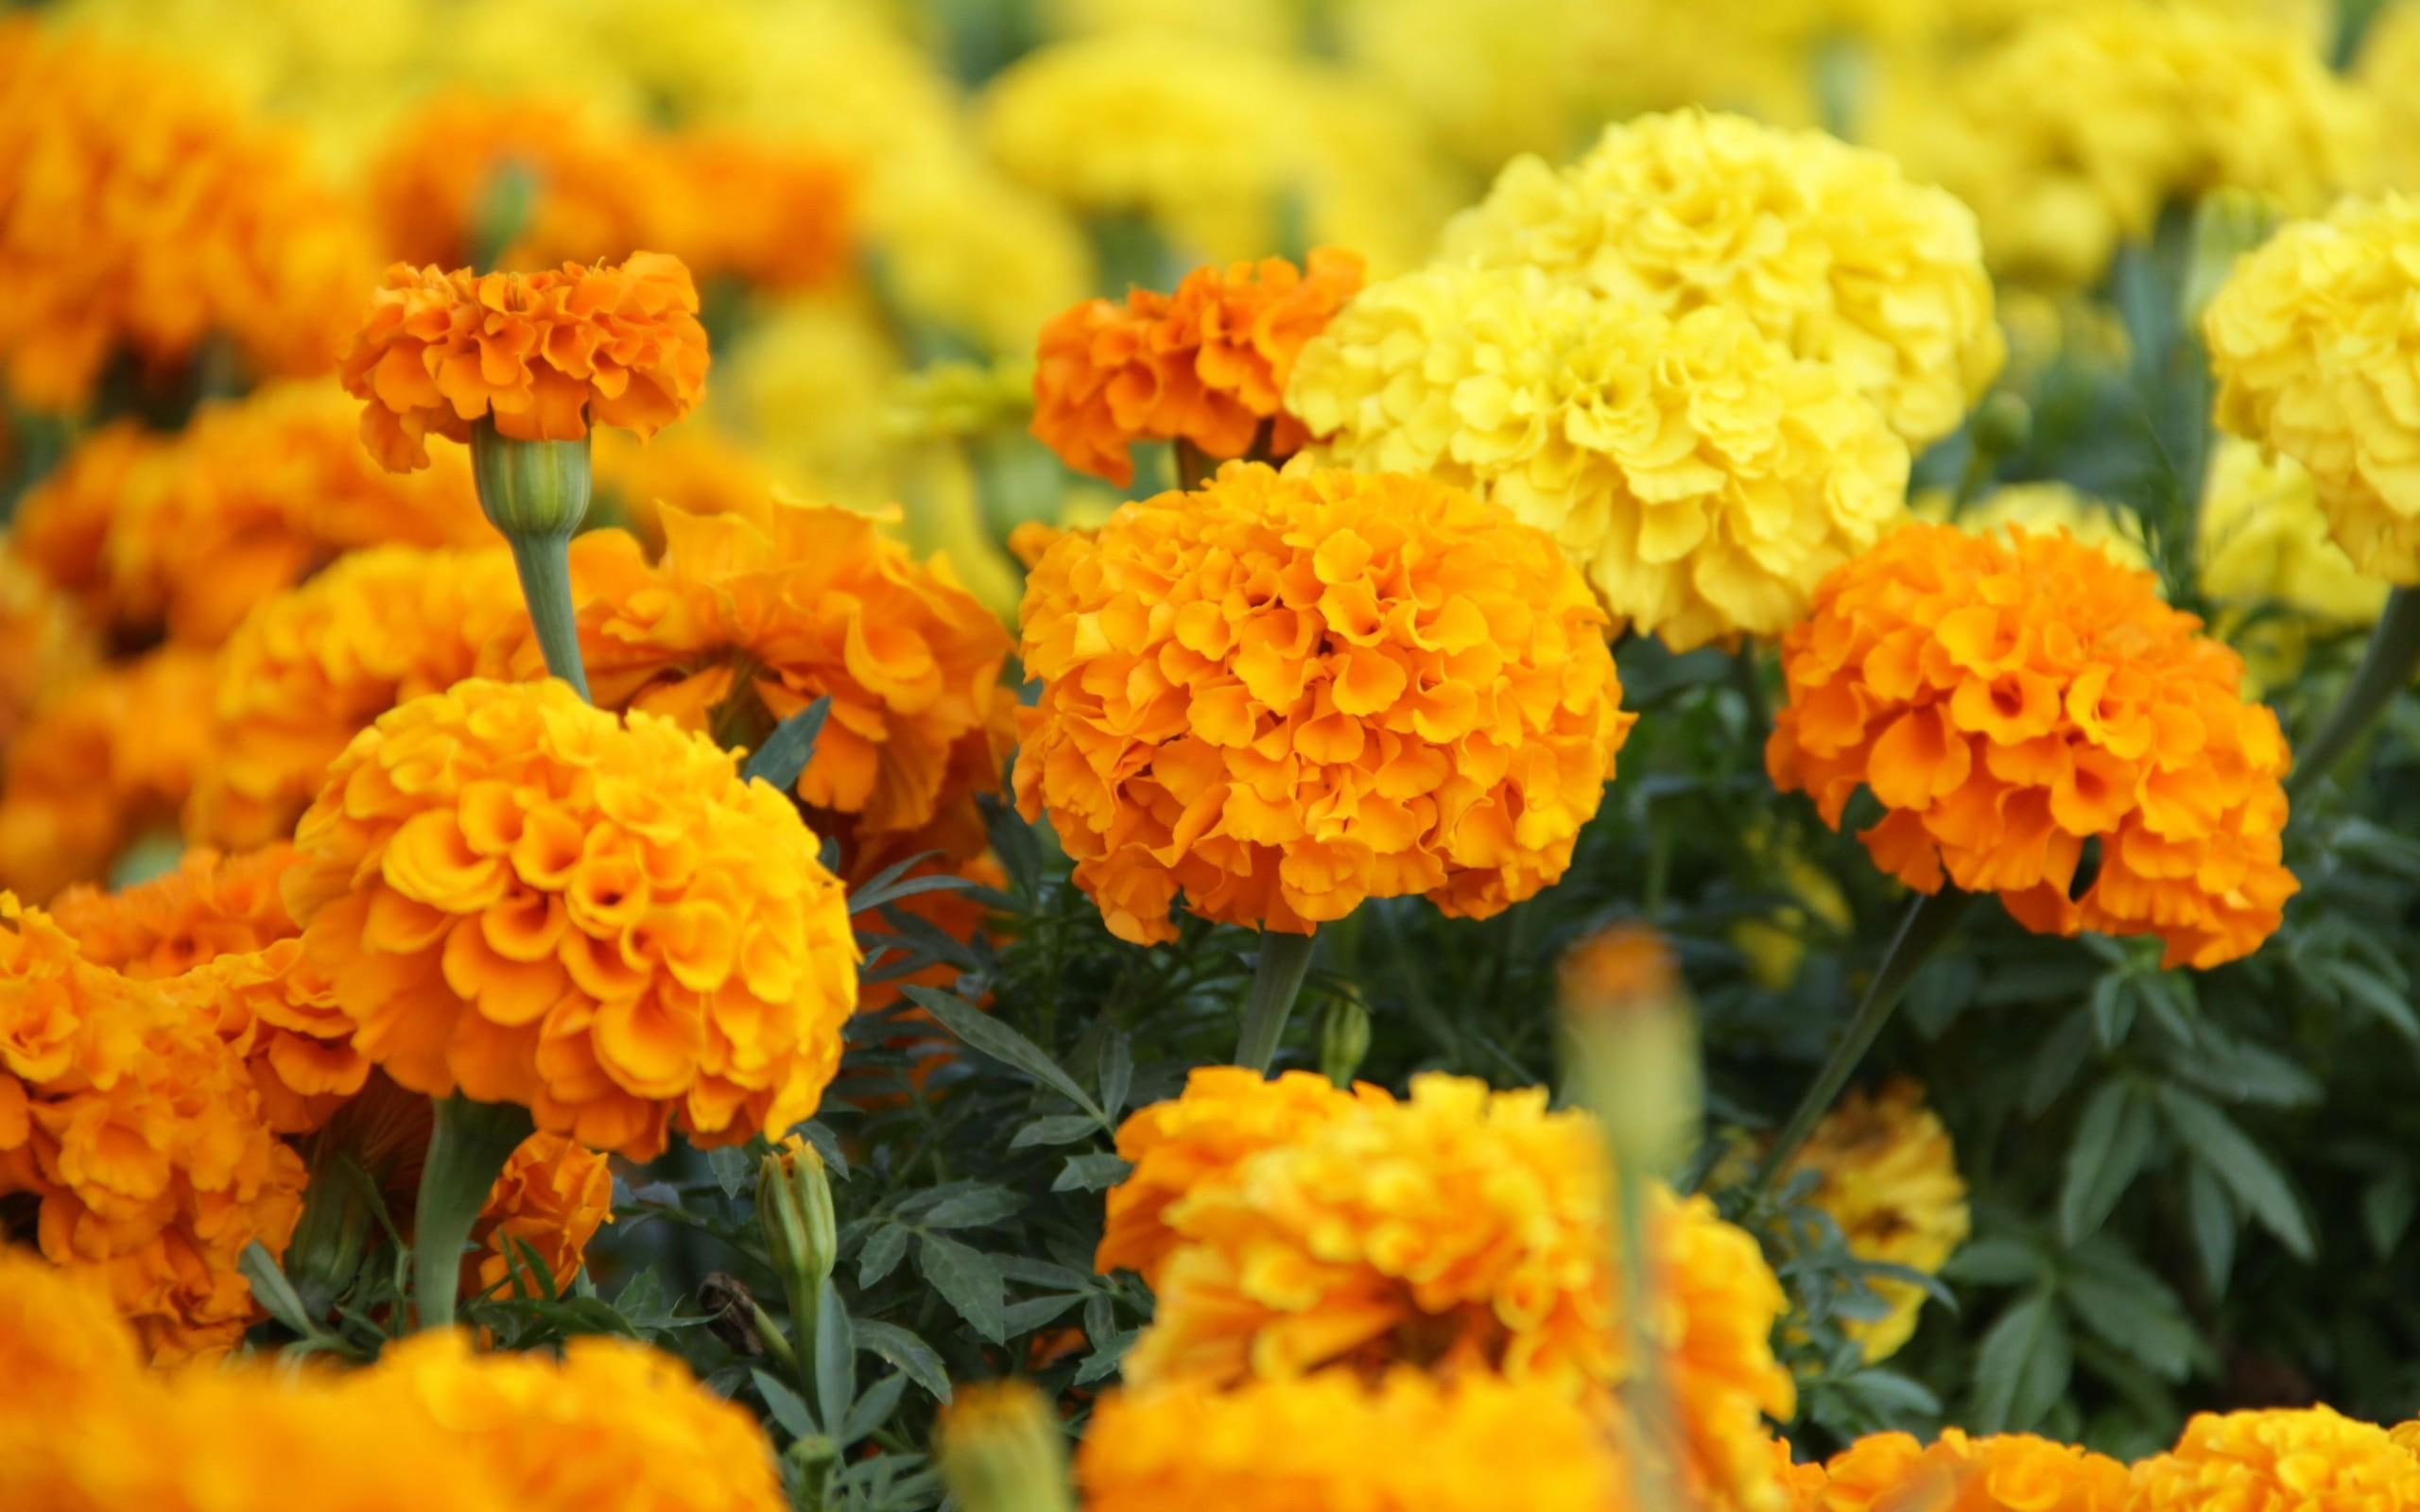 Wallpaper Marigolds, Orange And Yellow - Wallpaperforu